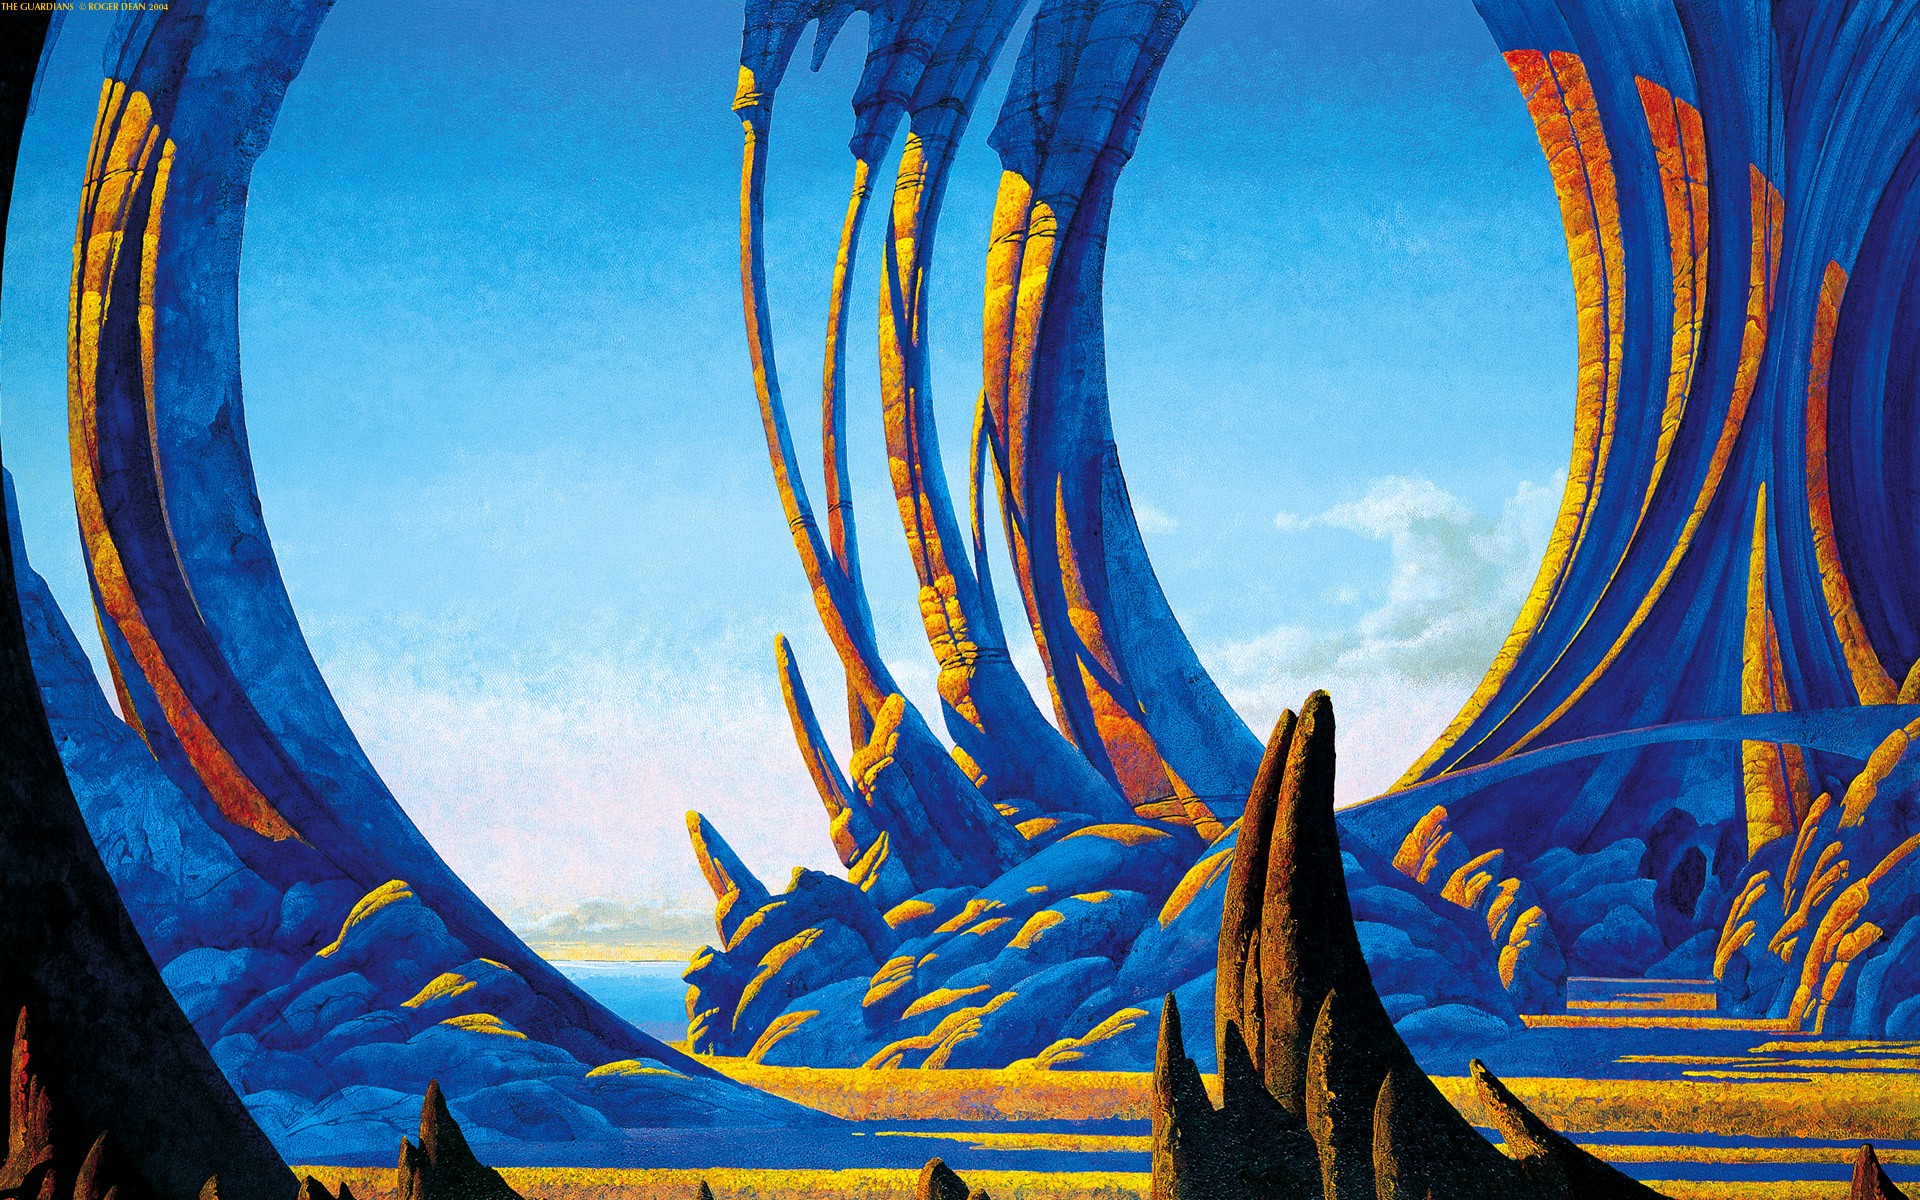 General 1920x1200 Roger Dean progressive rock blue artwork music Yes album covers cover art fantasy art alien world rock formation